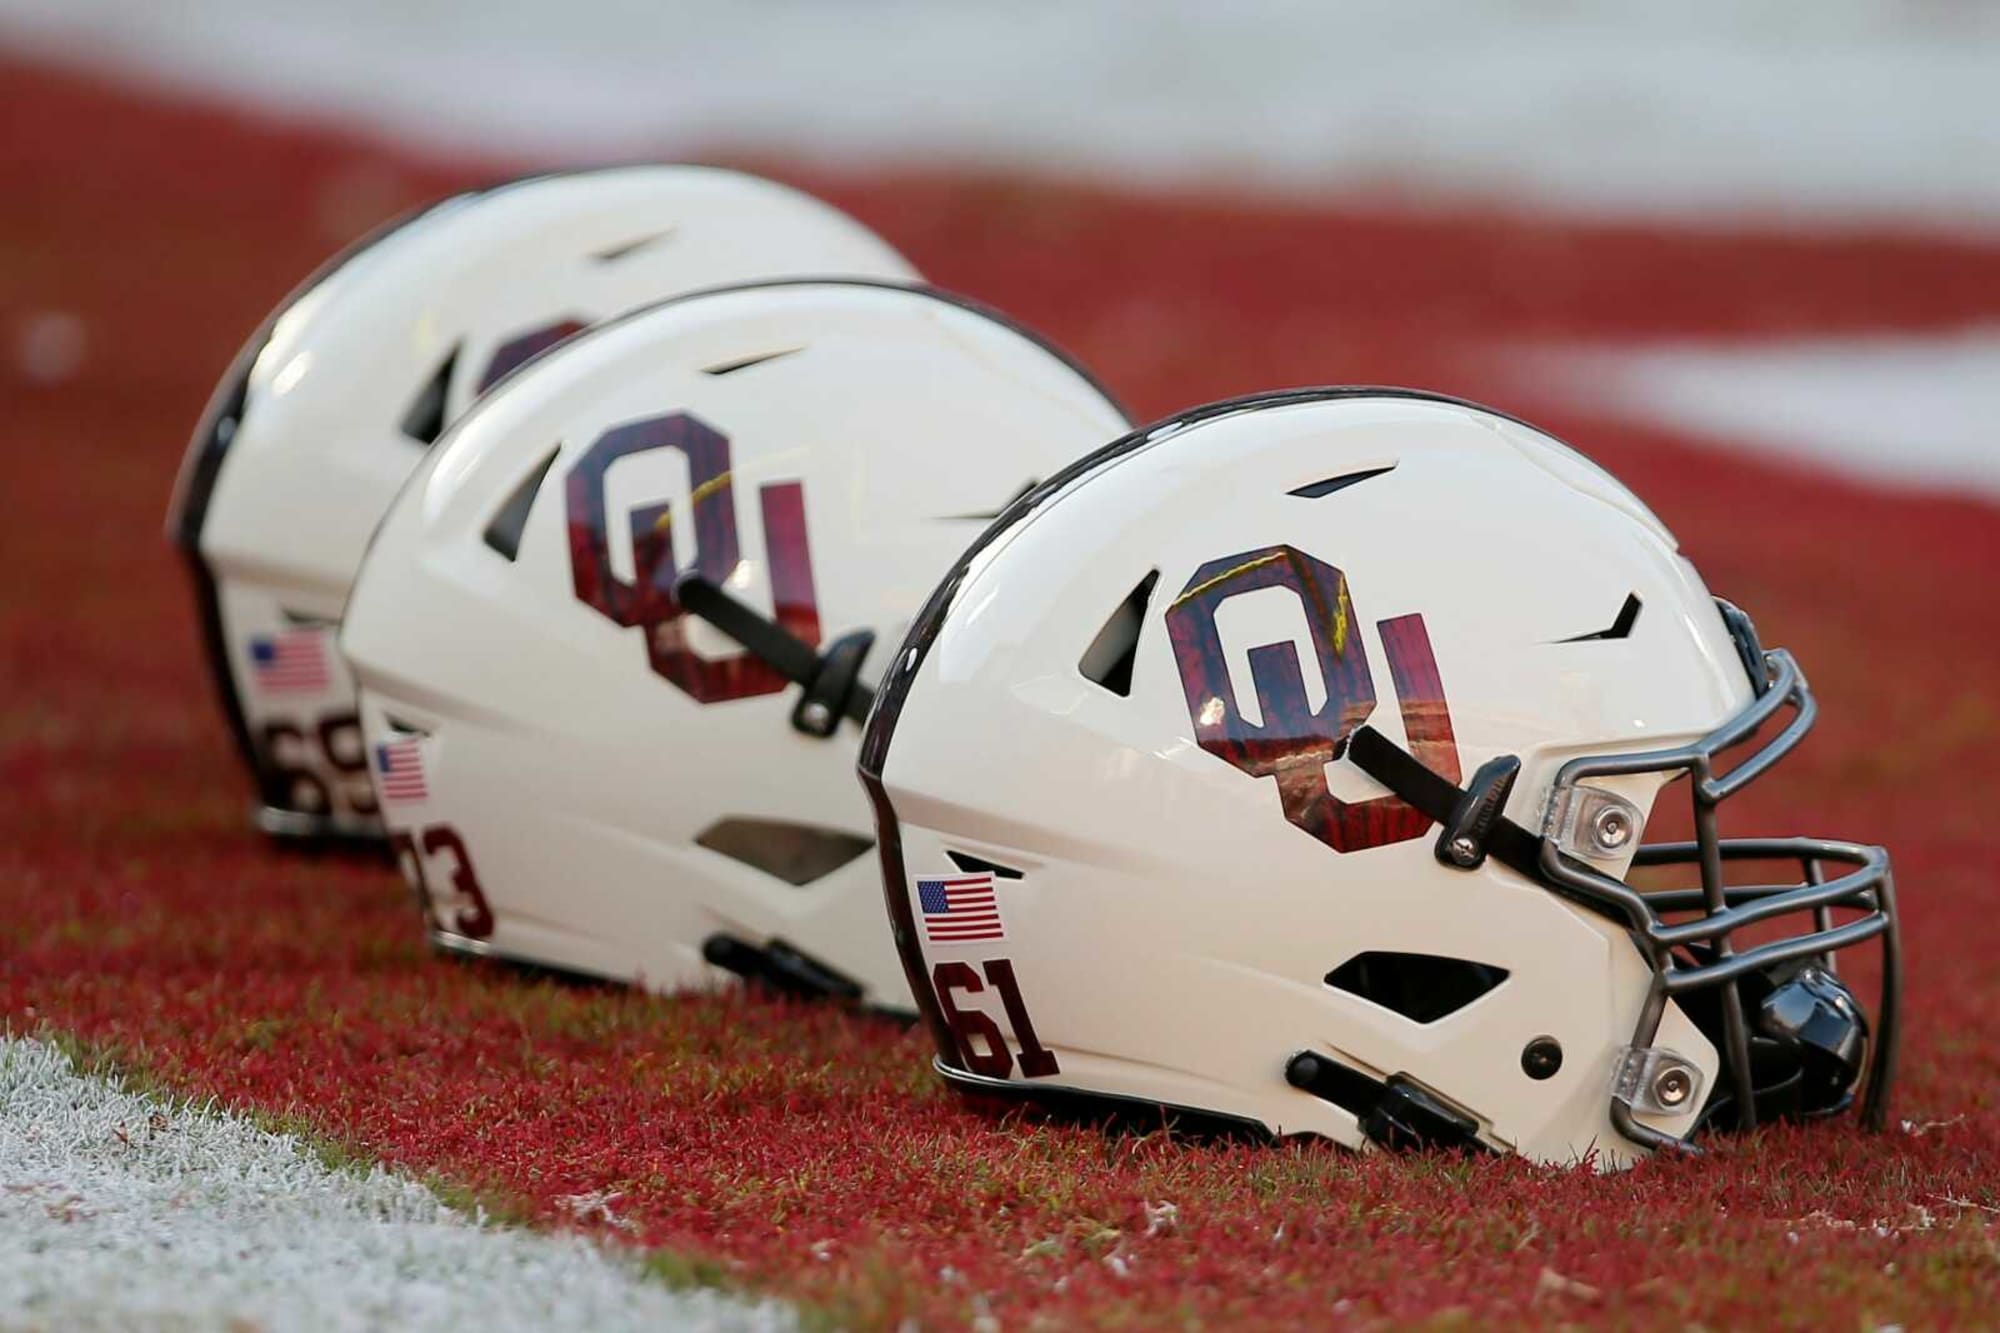 Davis Beville joins OU; Oklahoma State football needs to add backup QB